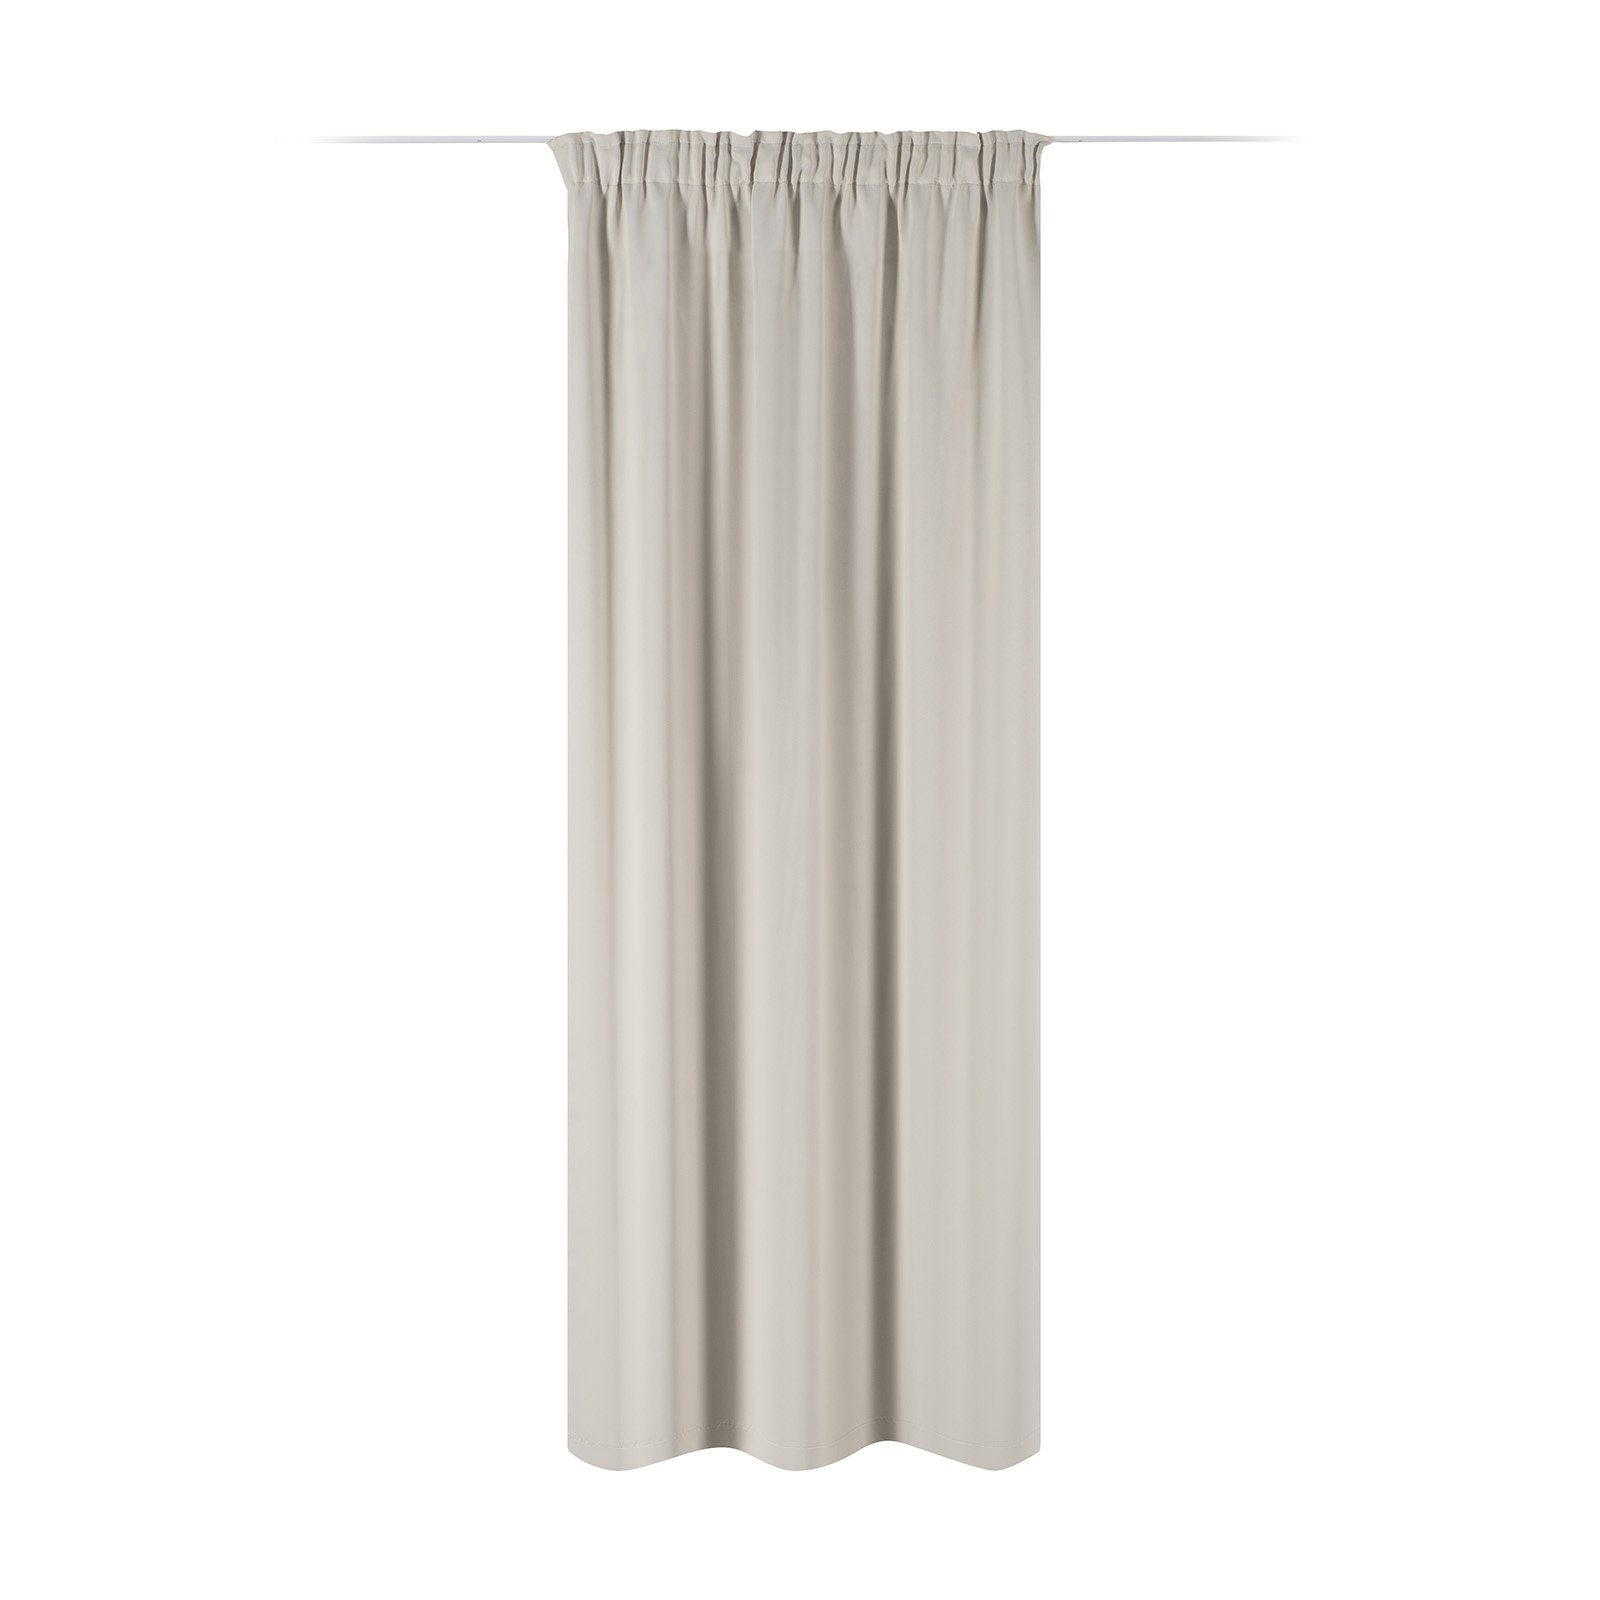 Vorhang Vorhang blickdicht, 140x245cm, Kräuselband, creme, JEMIDI | Fertiggardinen